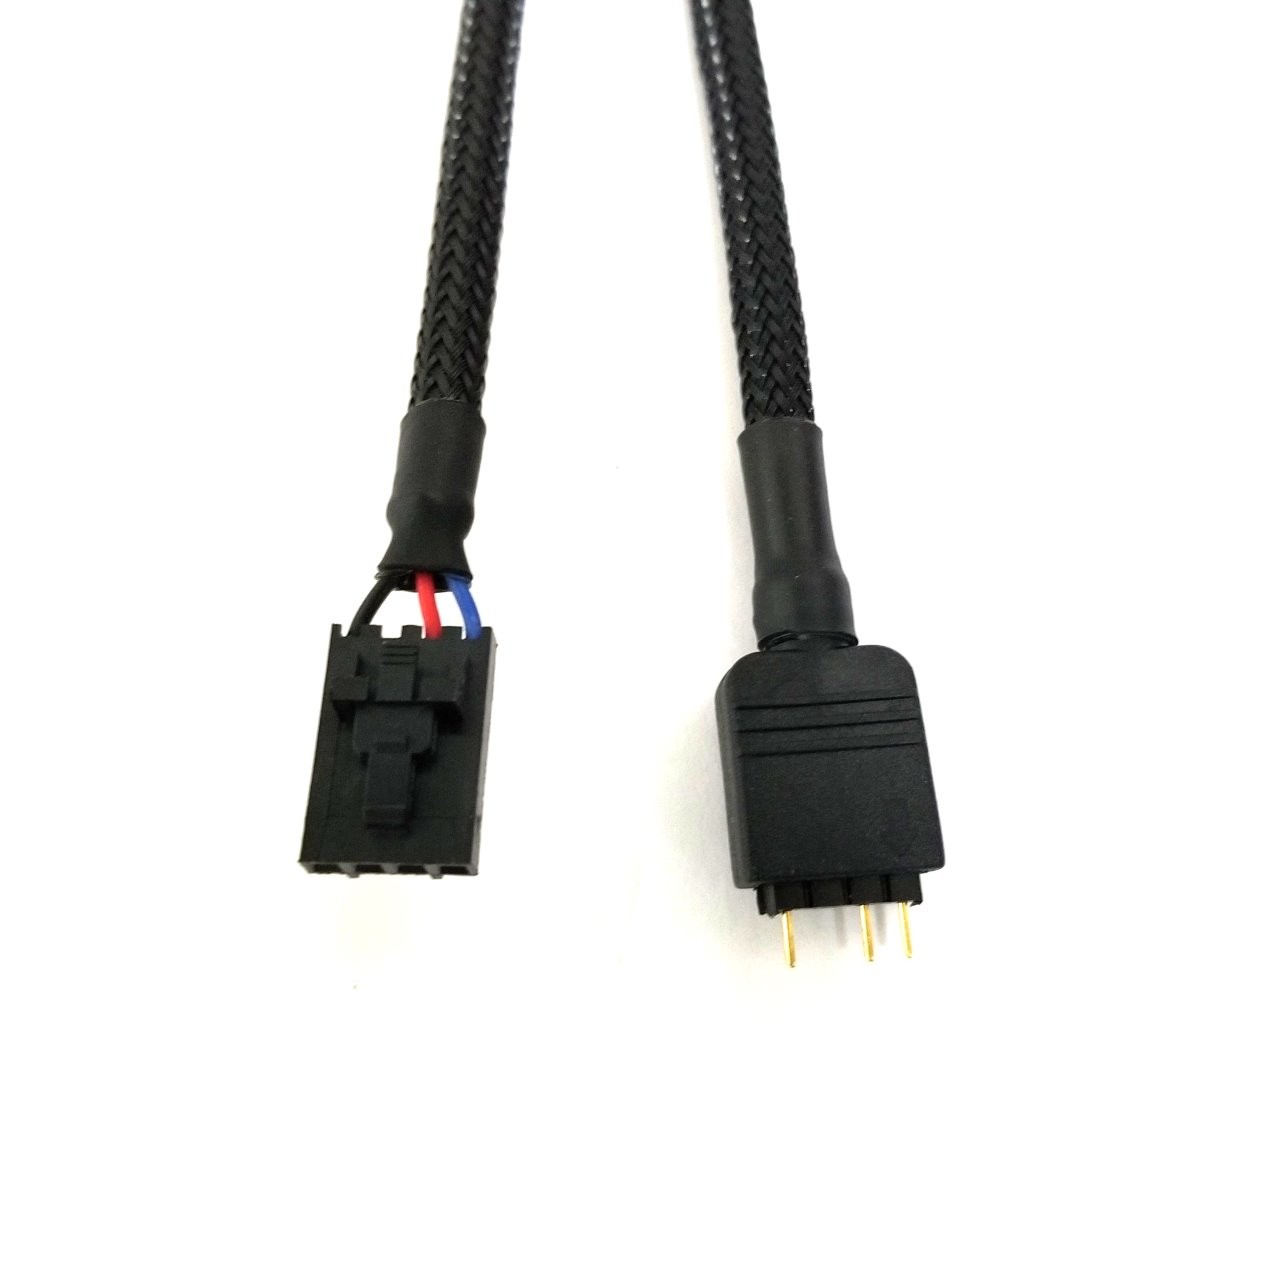 Corsair LED RGB 4 Pin to 5v RGB 3 Pin Male Connector Adapter Cable - MODDIY